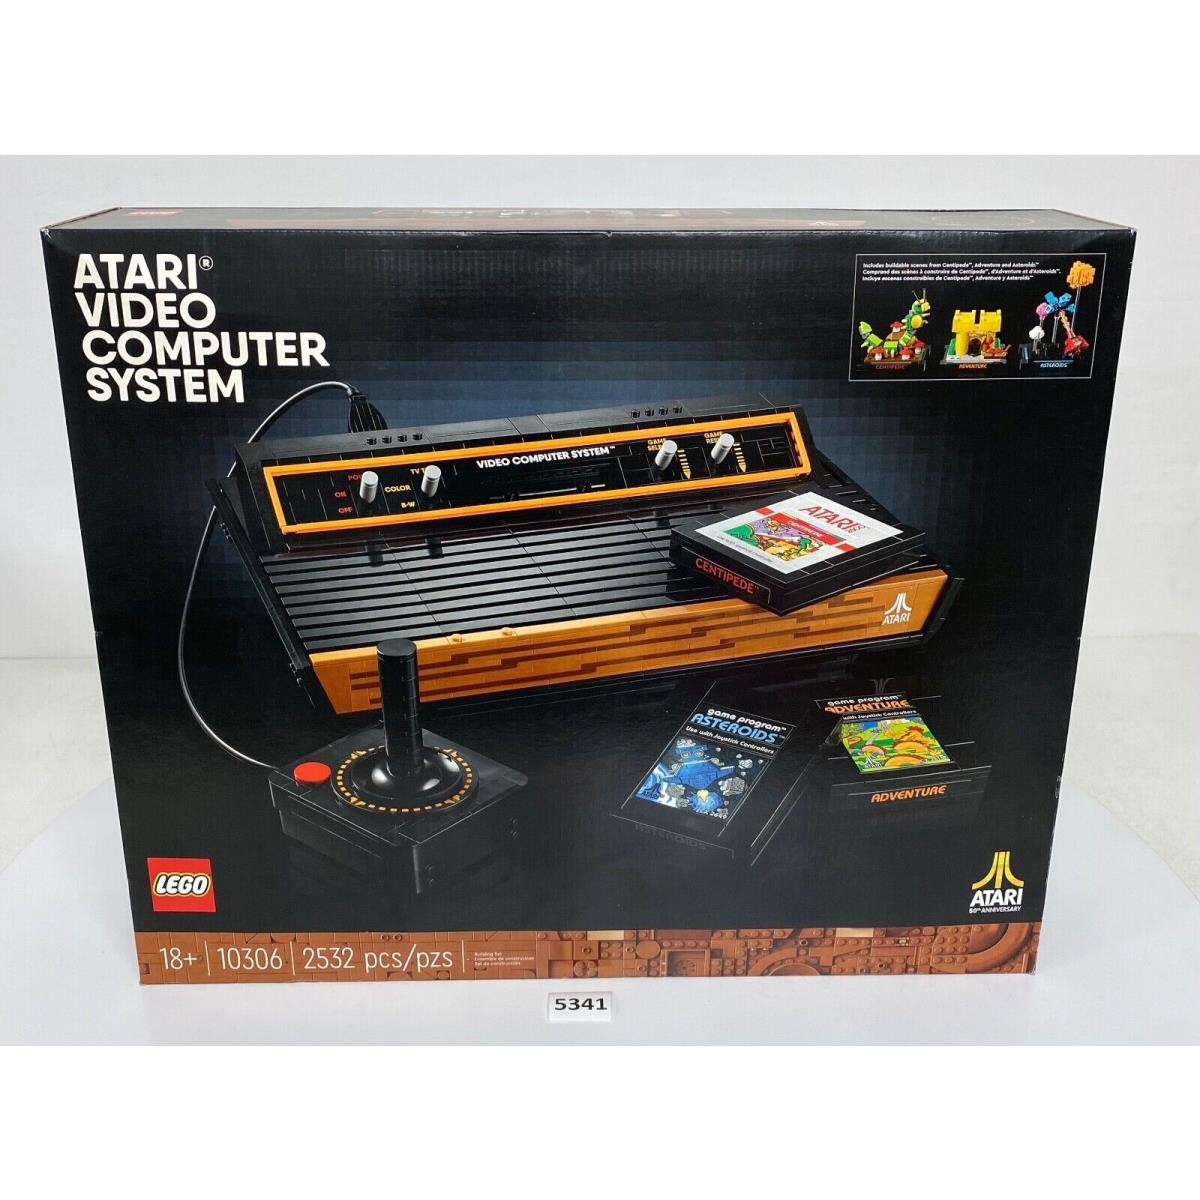 Lego 10306 Atari Video Computer System 2532pcs